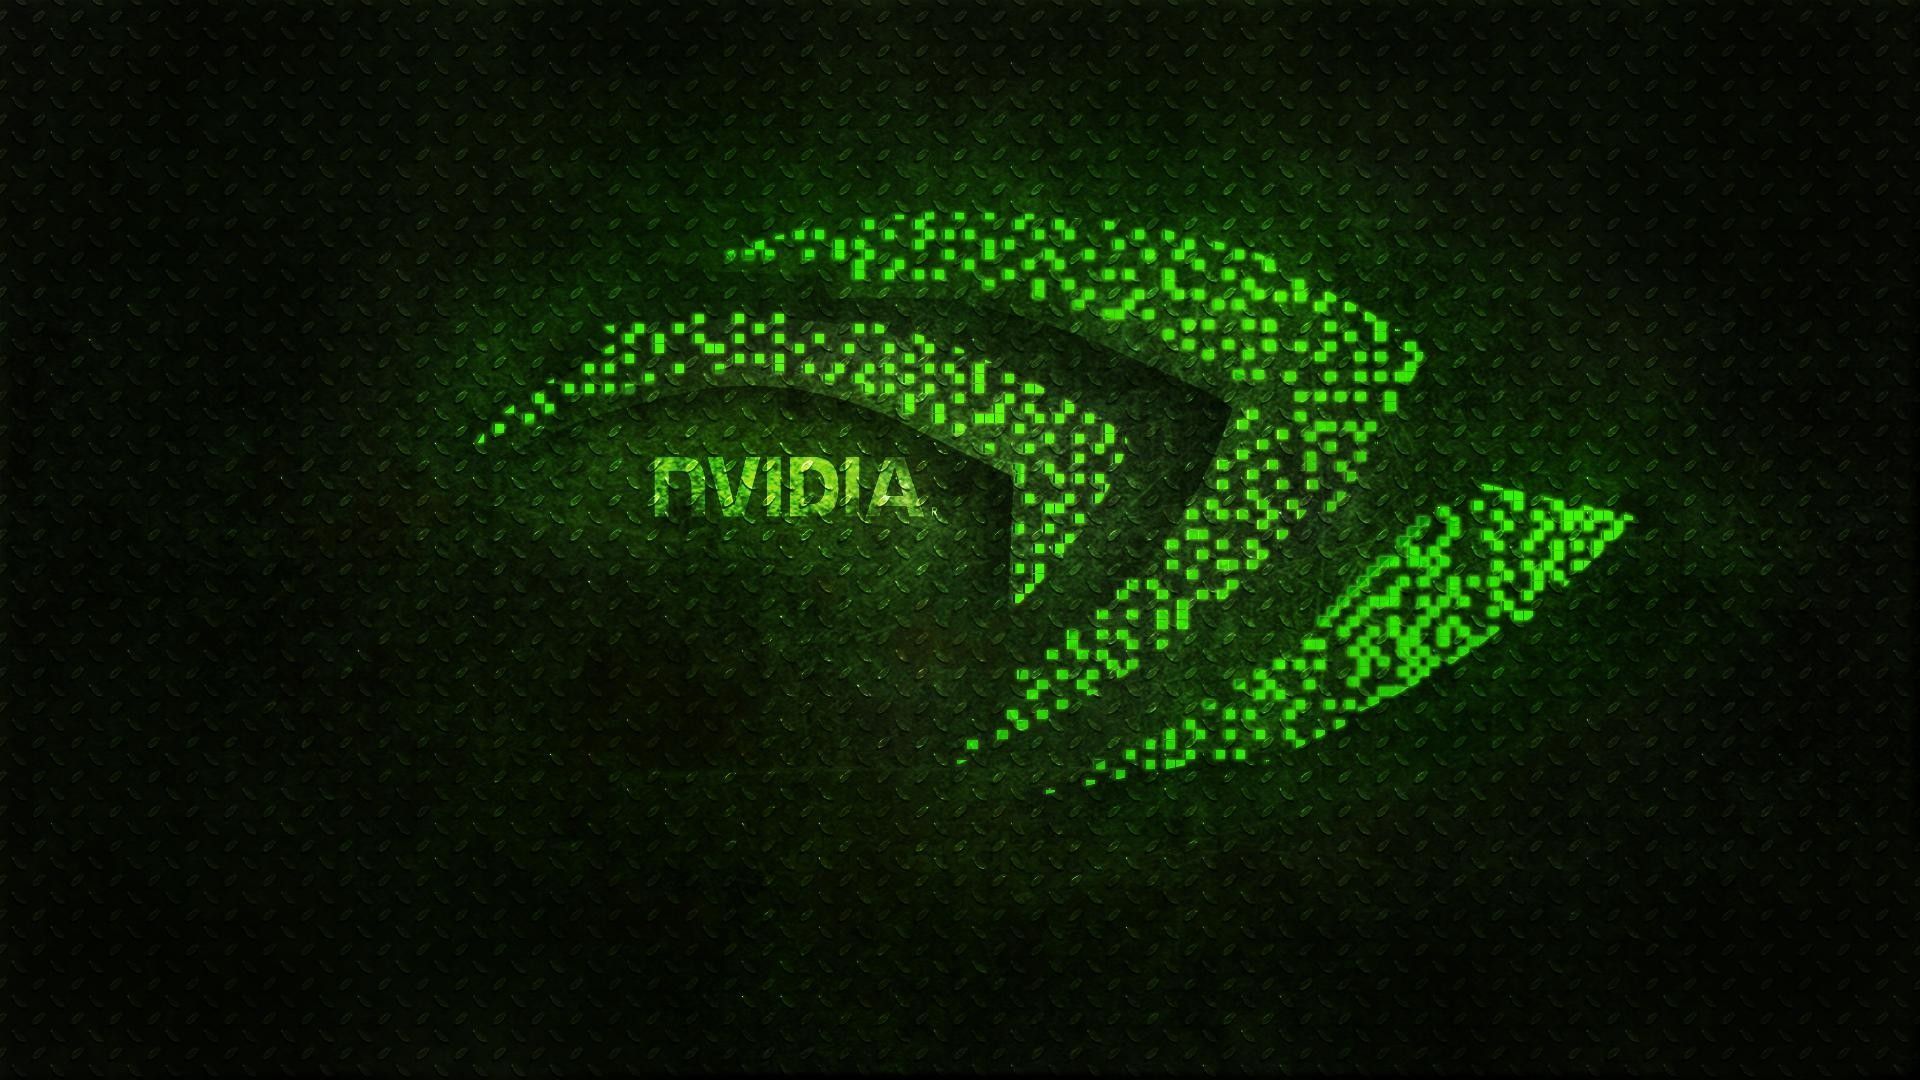 Wallpaper.wiki Picture Nvidia HD Free Download PIC. Logo Design Inspiration Graphics, Nvidia, Desktop Wallpaper